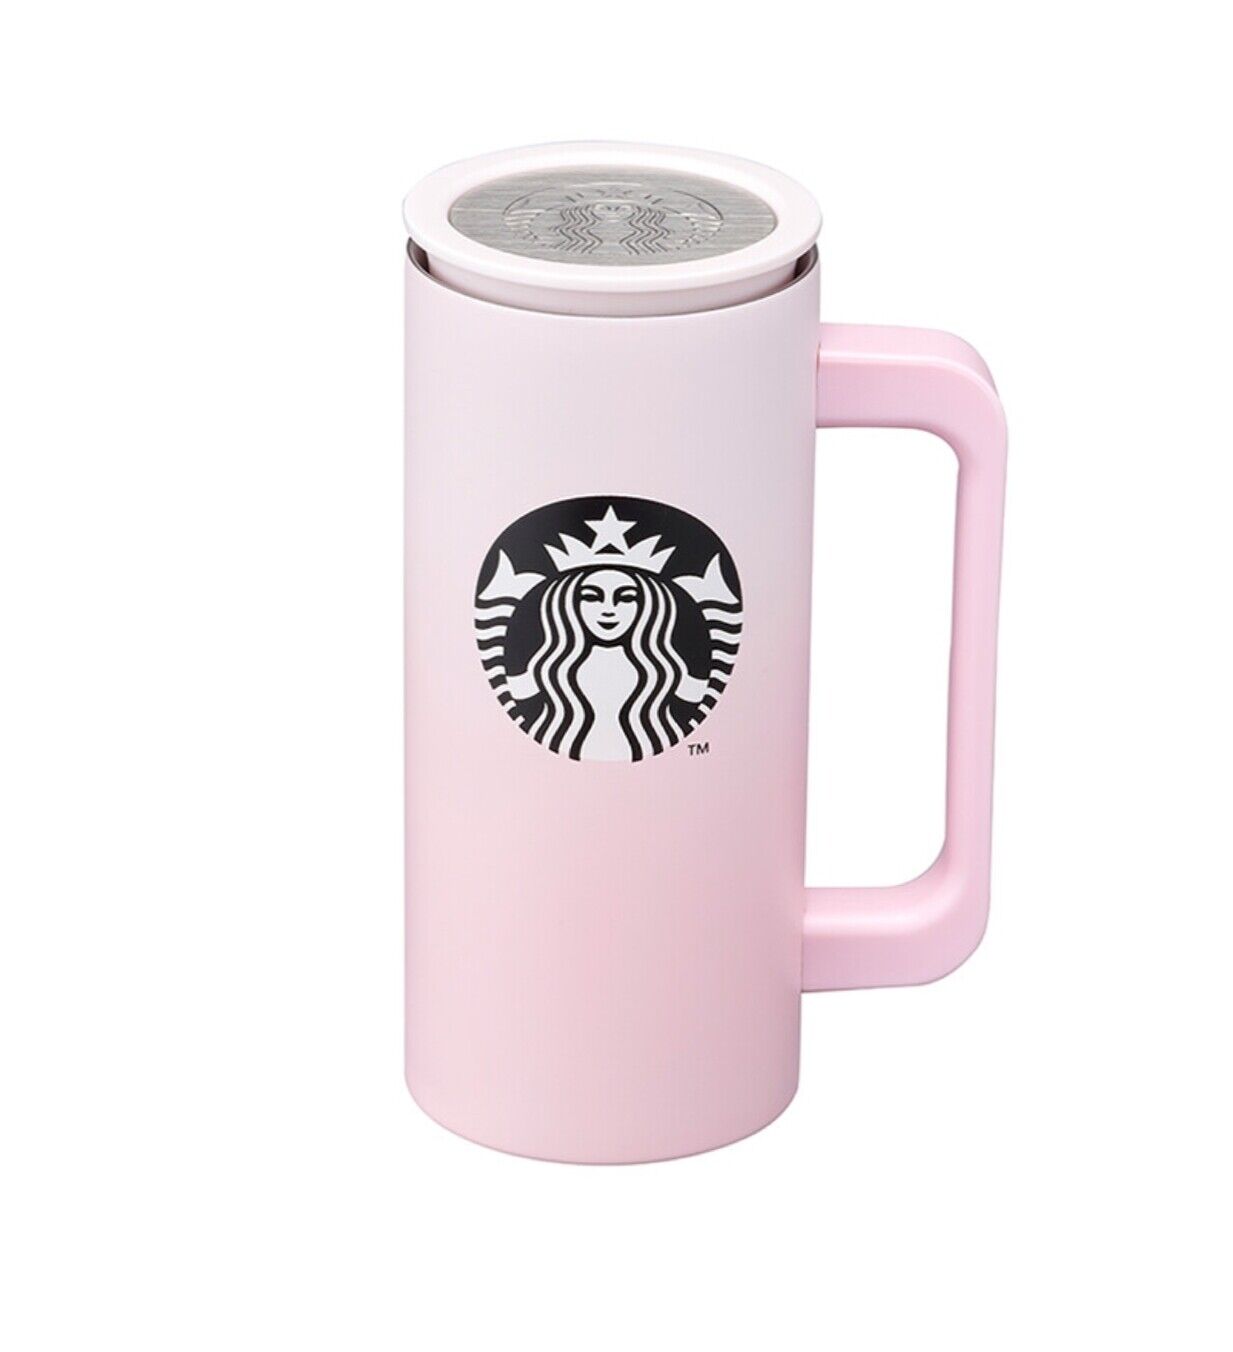 Starbucks Korea 2021 SS Sweet pink newton tumbler 355ml limited edition